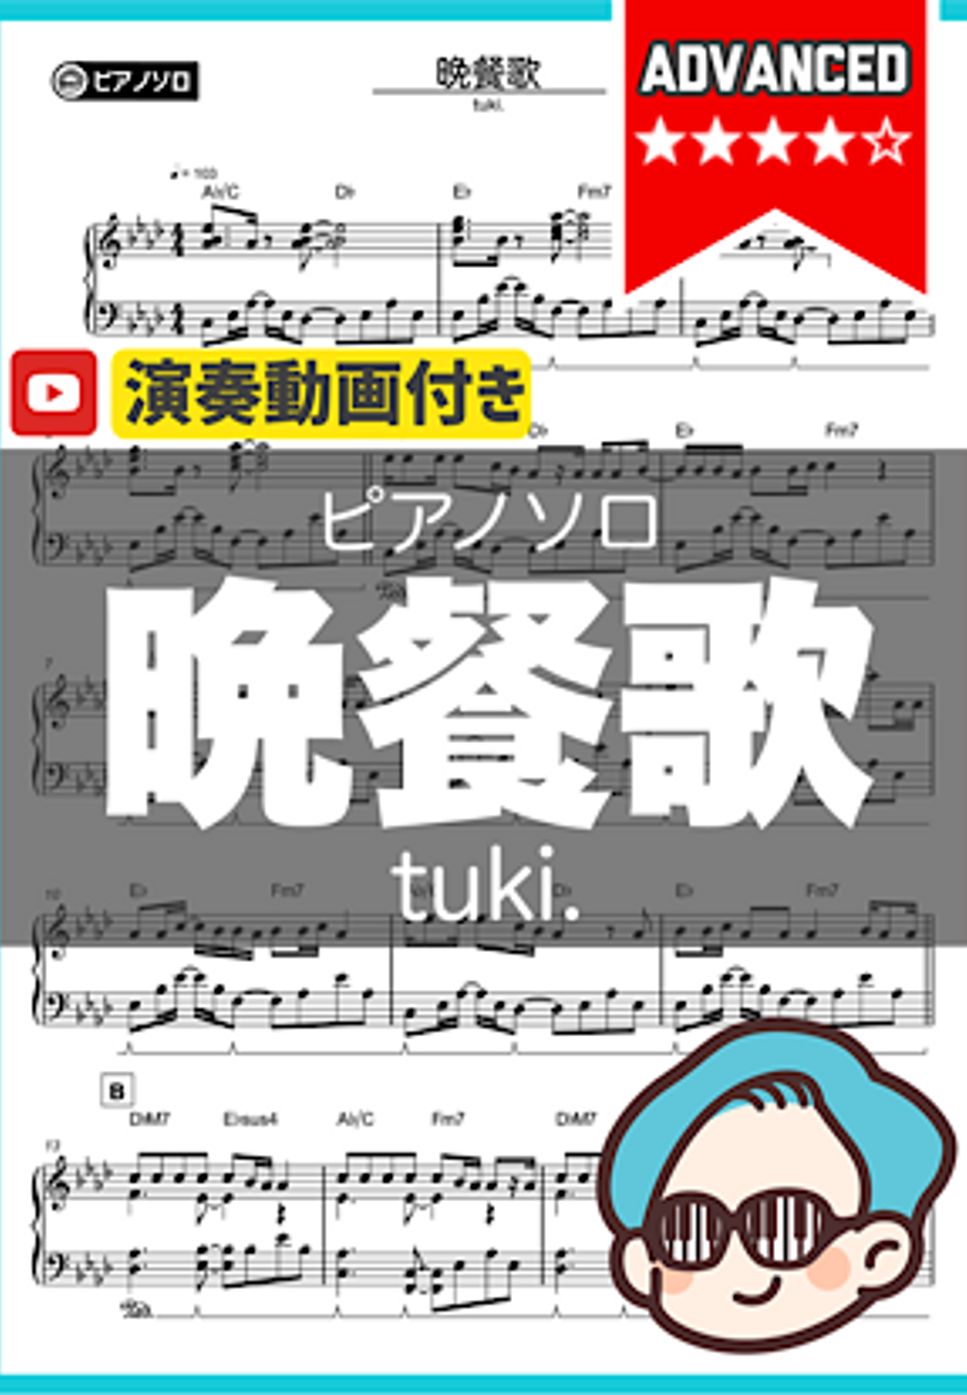 tuki. - 晩餐歌 by シータピアノ